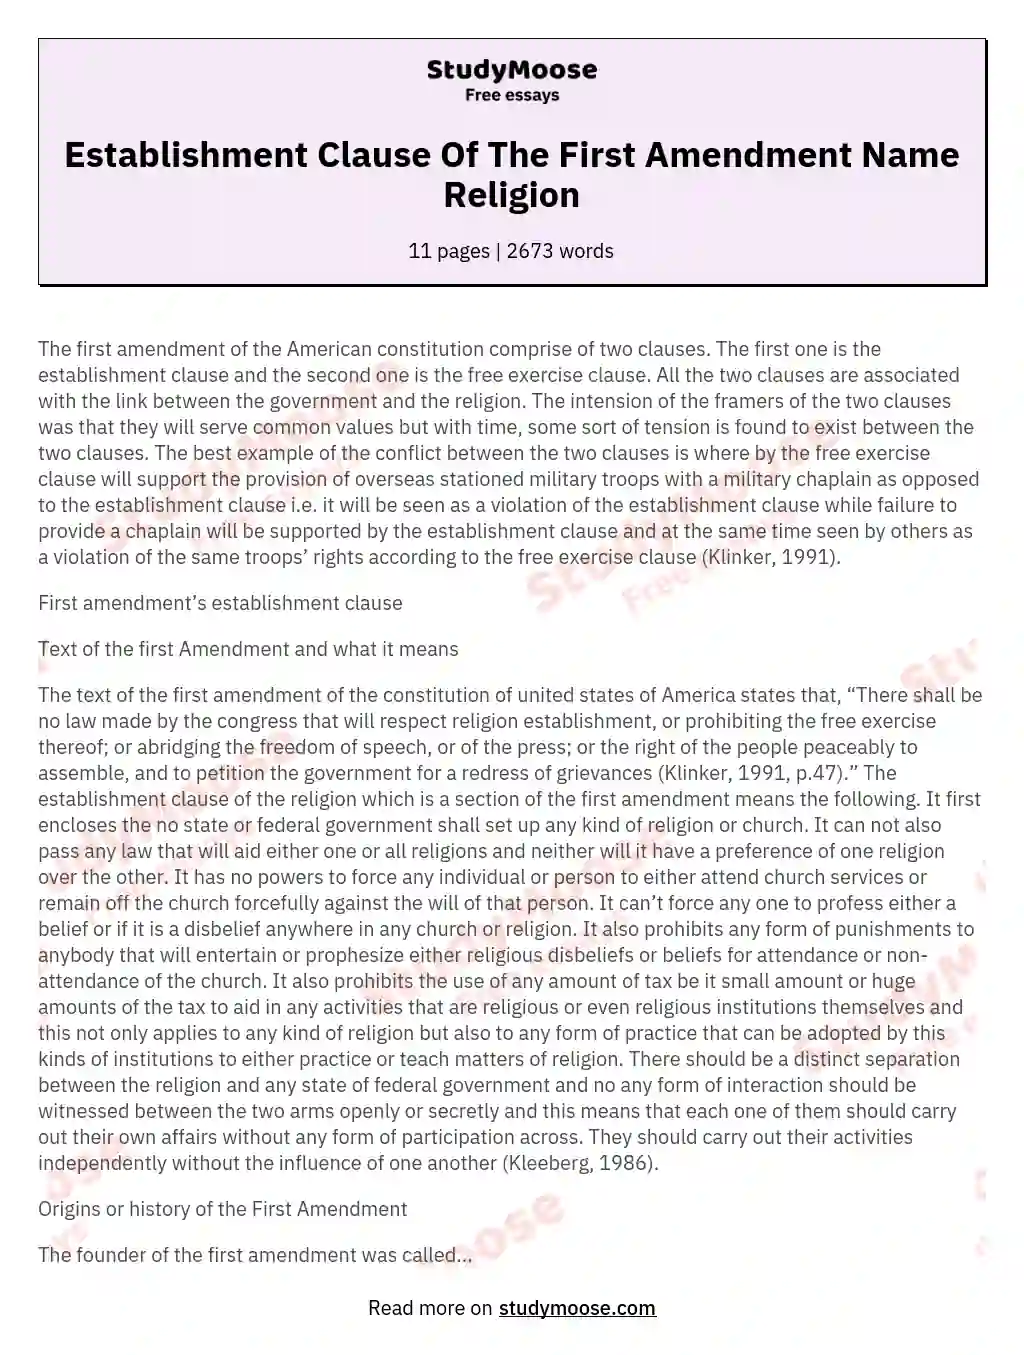 Establishment Clause Of The First Amendment Name Religion